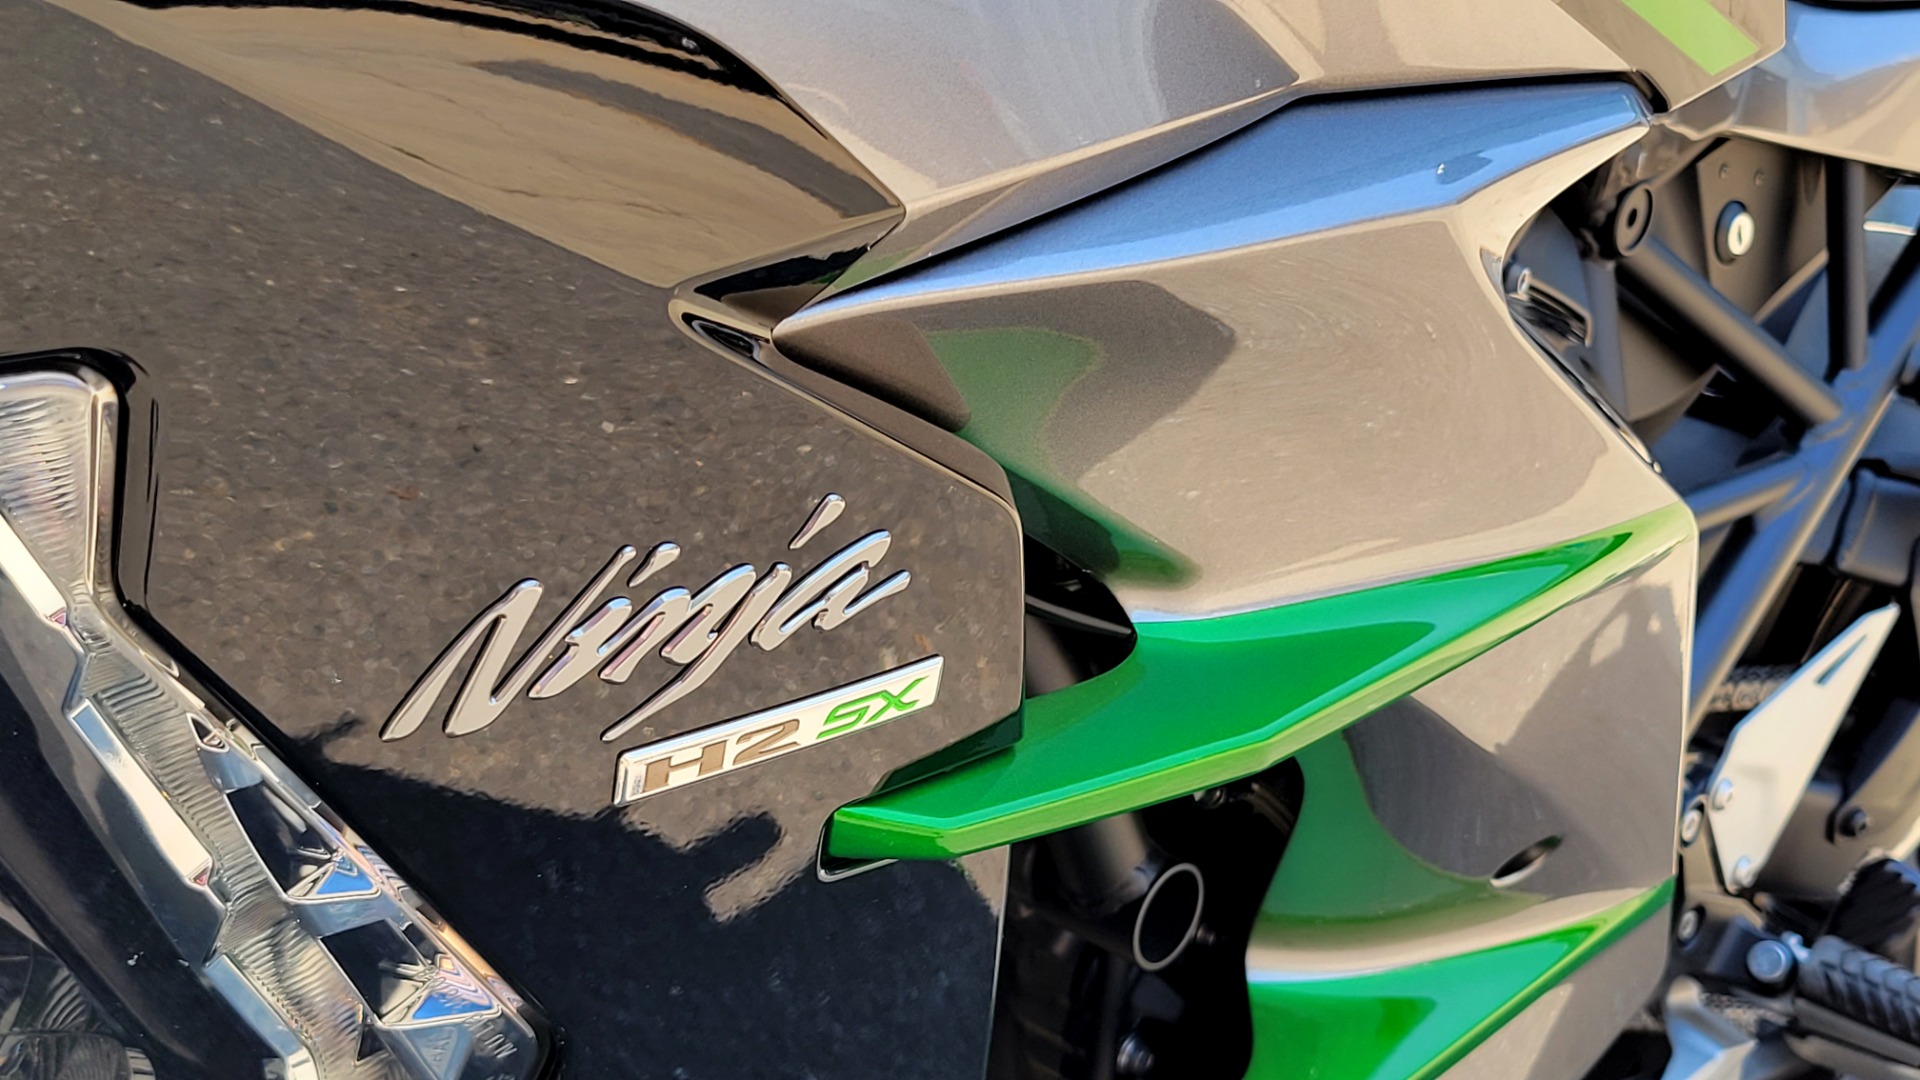 Used 2019 Kawasaki NINJA H2 SX / 998CC 197HP / SPORT TOURING MOTORCYCLE for sale $23,000 at Formula Imports in Charlotte NC 28227 3